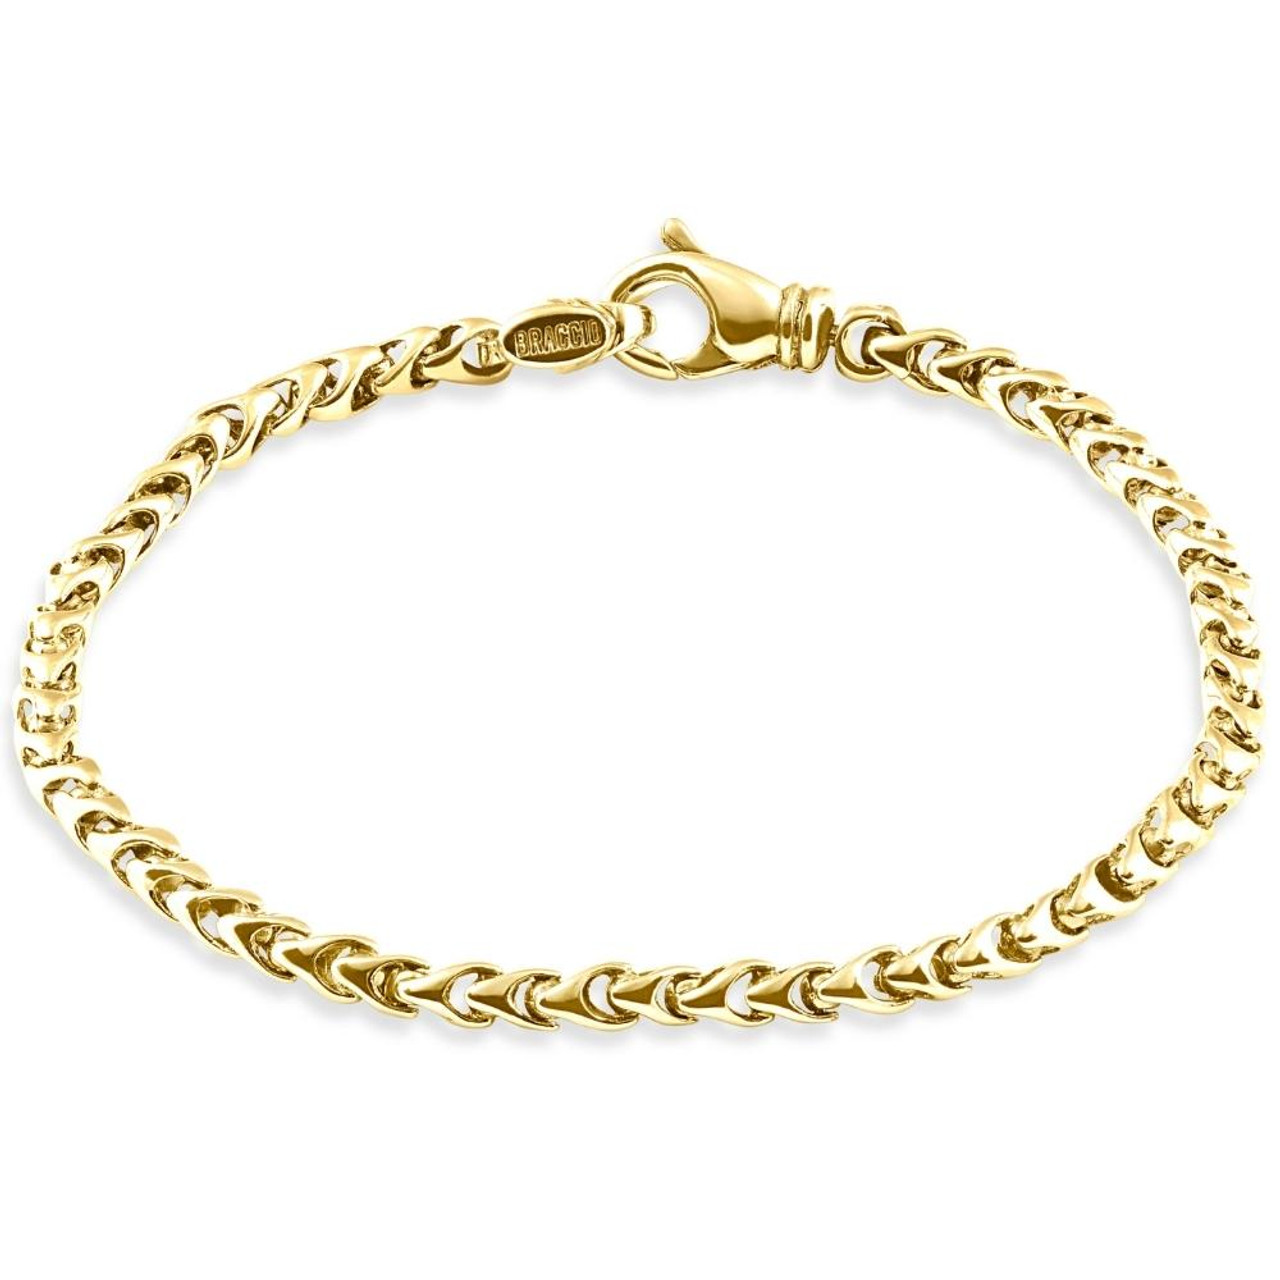 Gold Bracelet Designs for Men #2024 | Gold Bracelet designs in 18k/22k |  #new #bracelet #design - YouTube